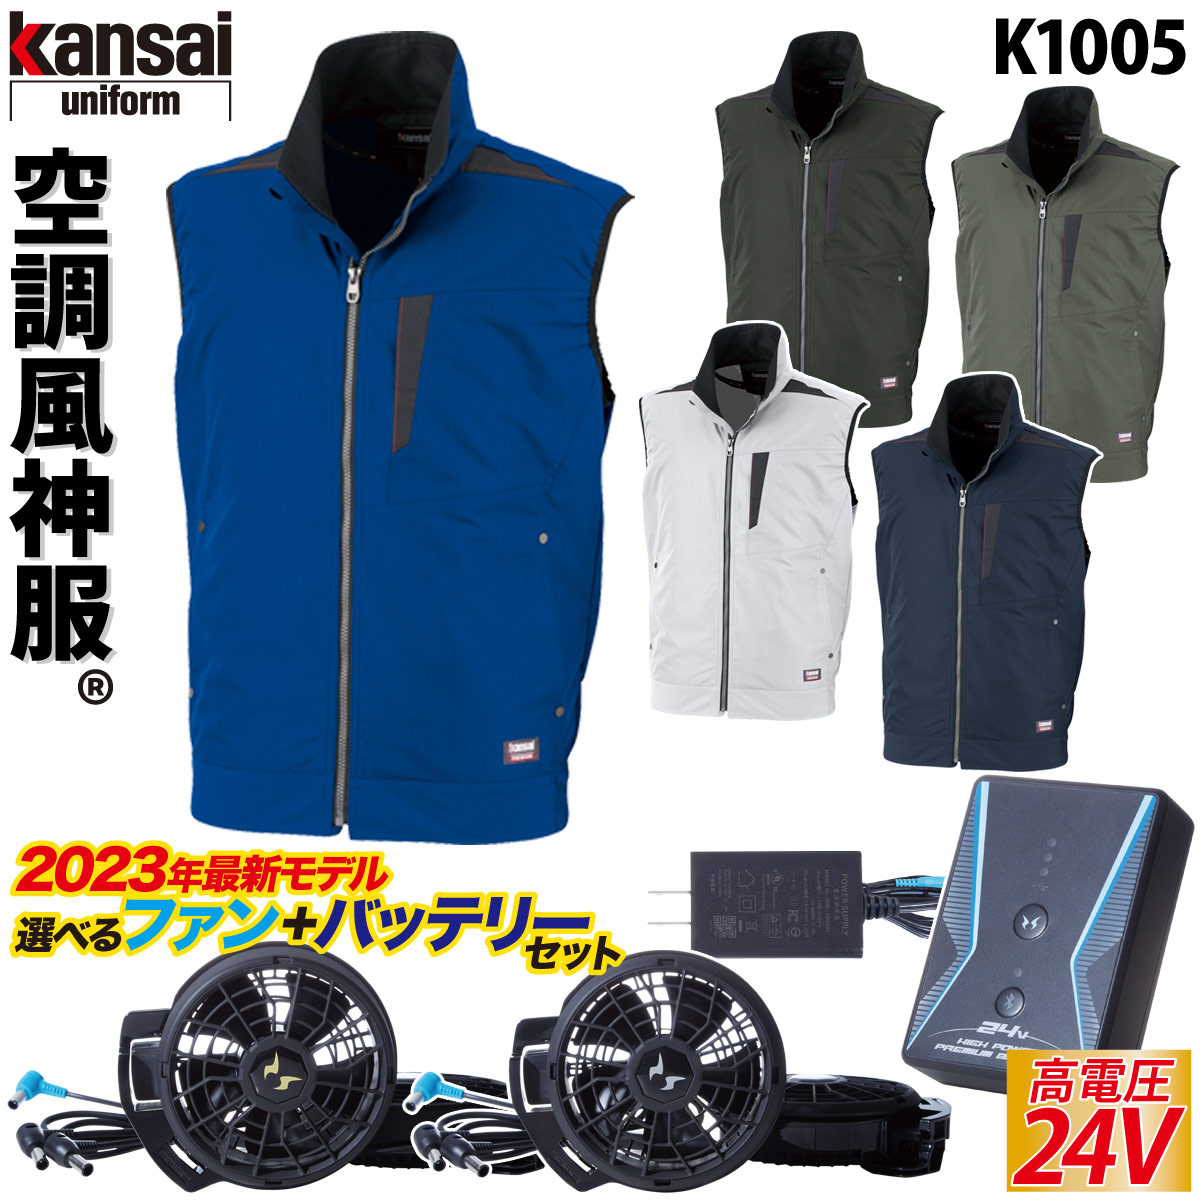 kansaiモデル 電動ファン付きウェア/カンサイ綿混空調風神服ベスト